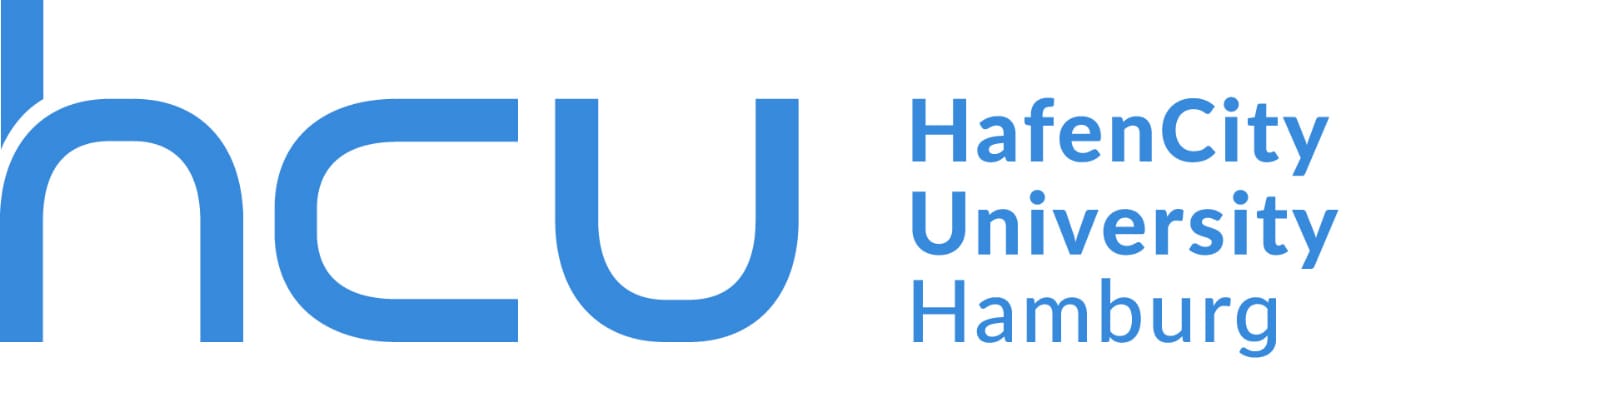 HafenCity Universität Hamburg logo